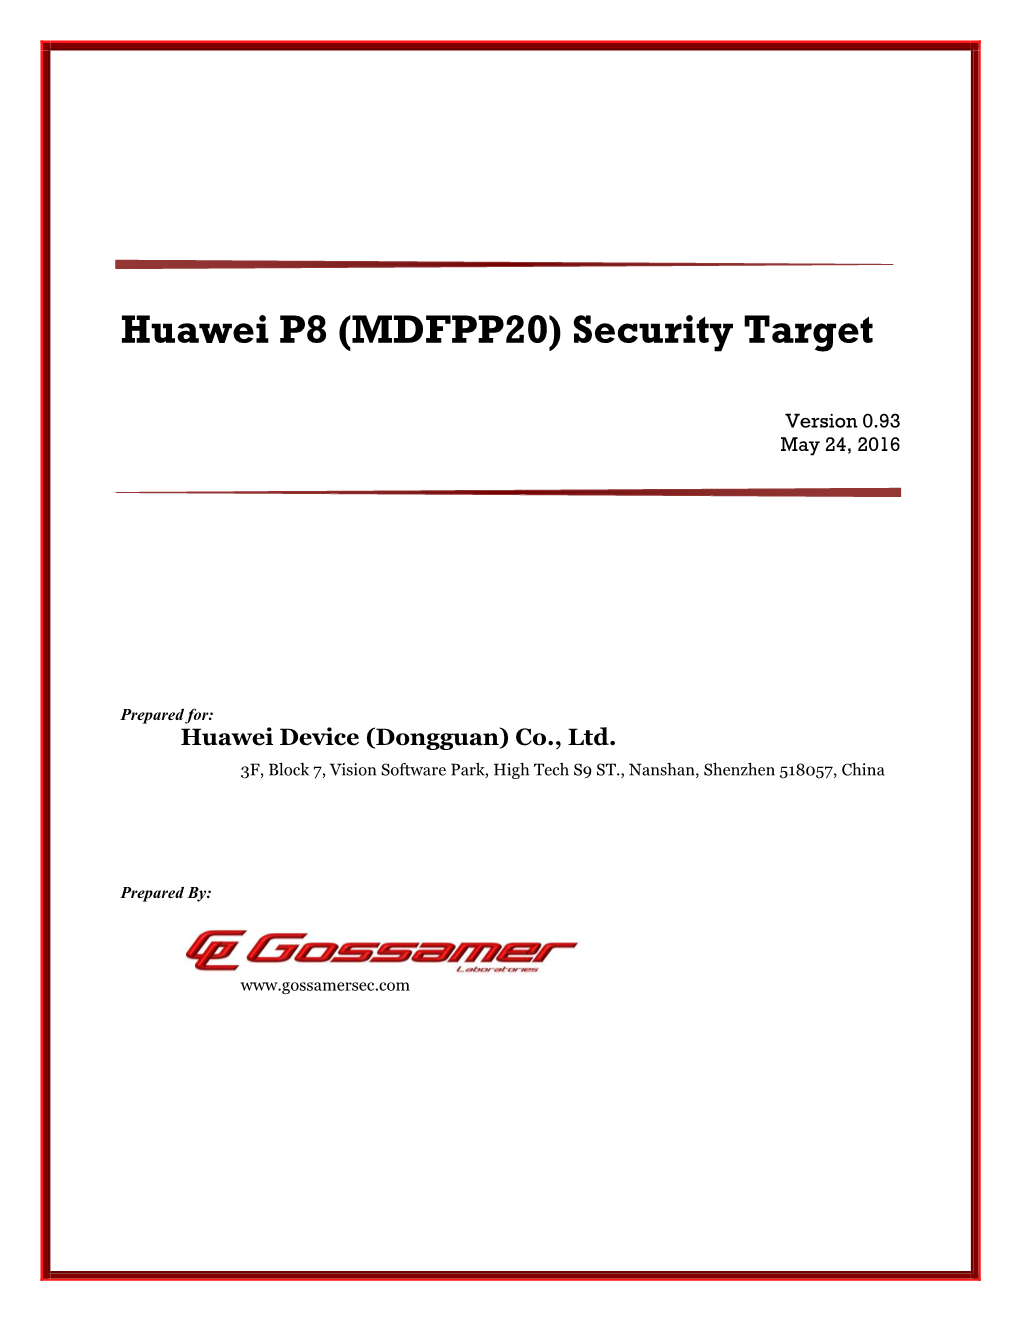 Huawei P8 (MDFPP20) Security Target